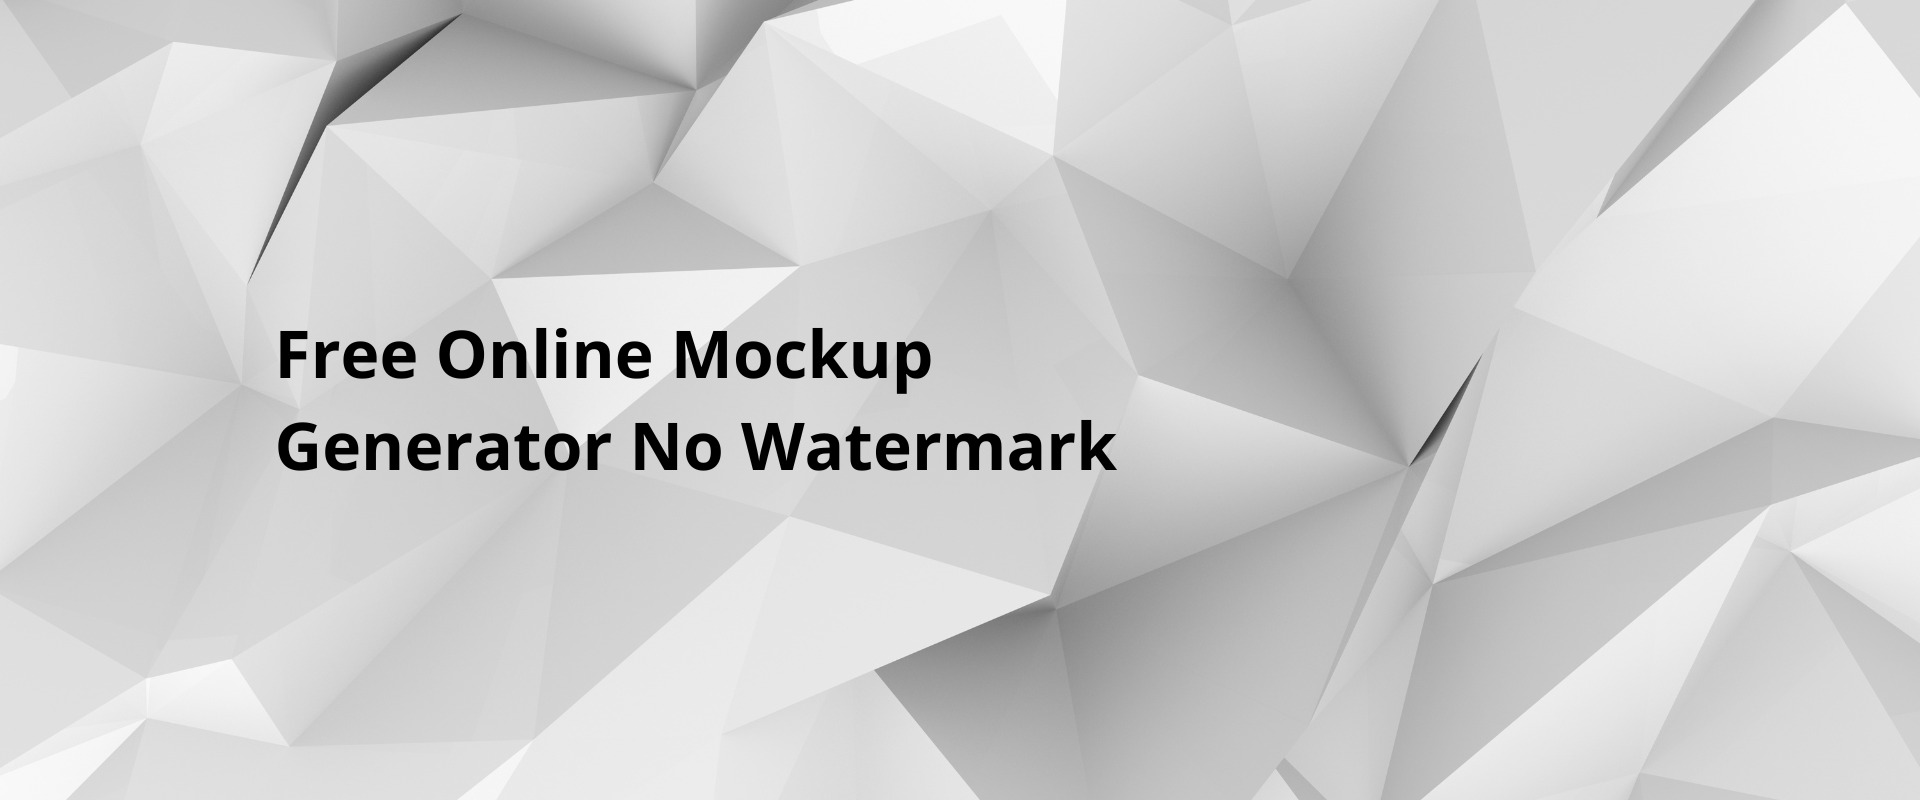 Free Online Mockup Generator No Watermark